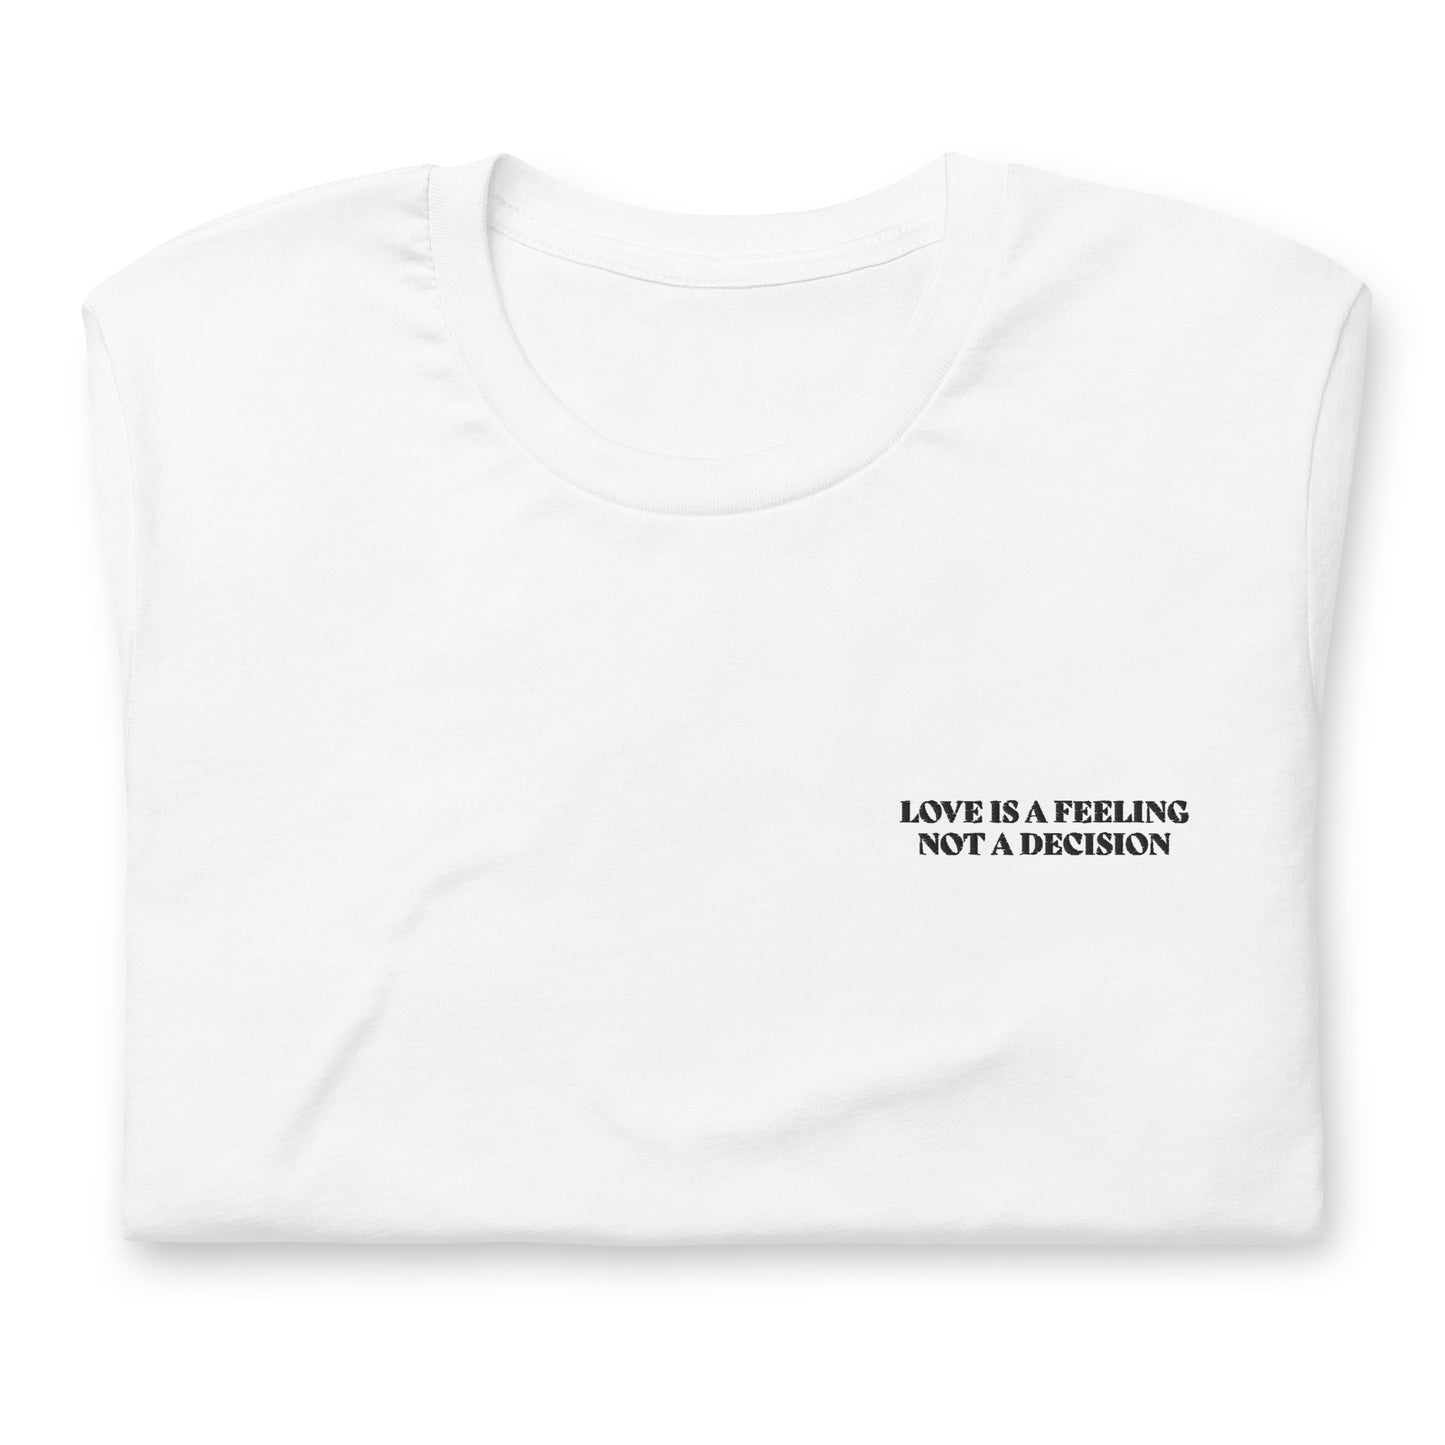 LOVE IS A FEELING NOT A DECISION - besticktes T-Shirt